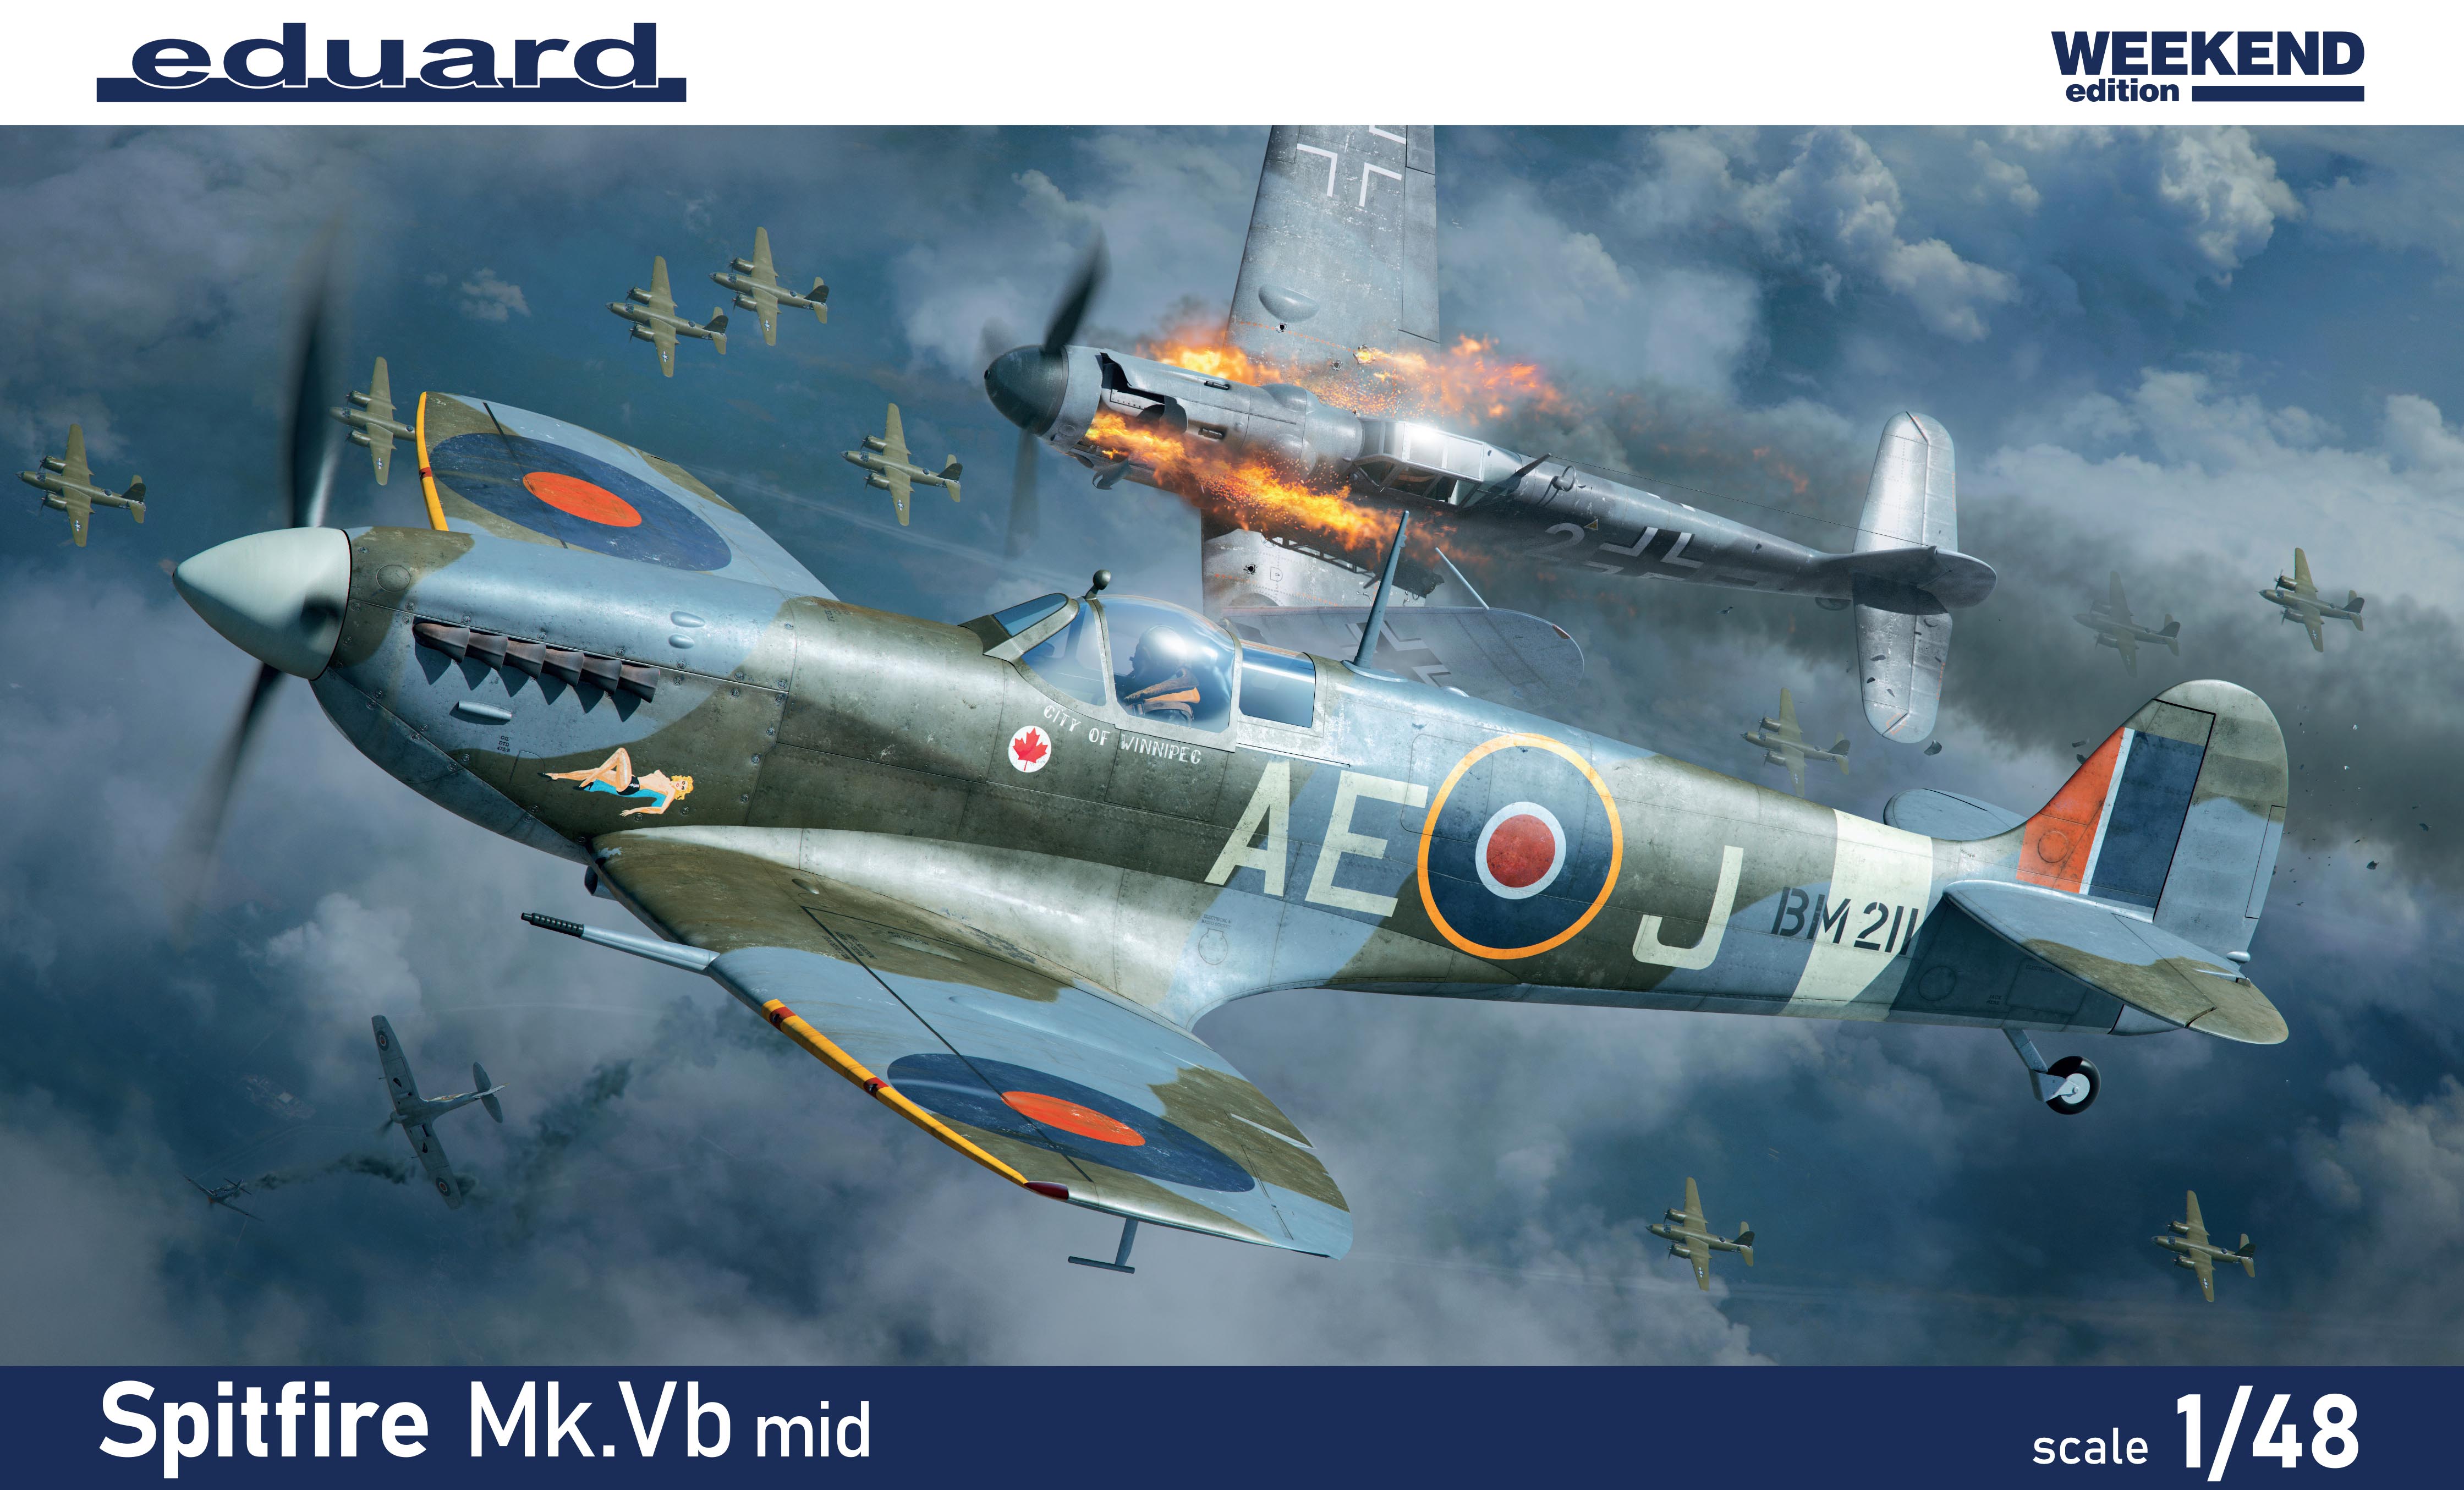 1/48 Spitfire Mk.Vb mid (Weekend edition)